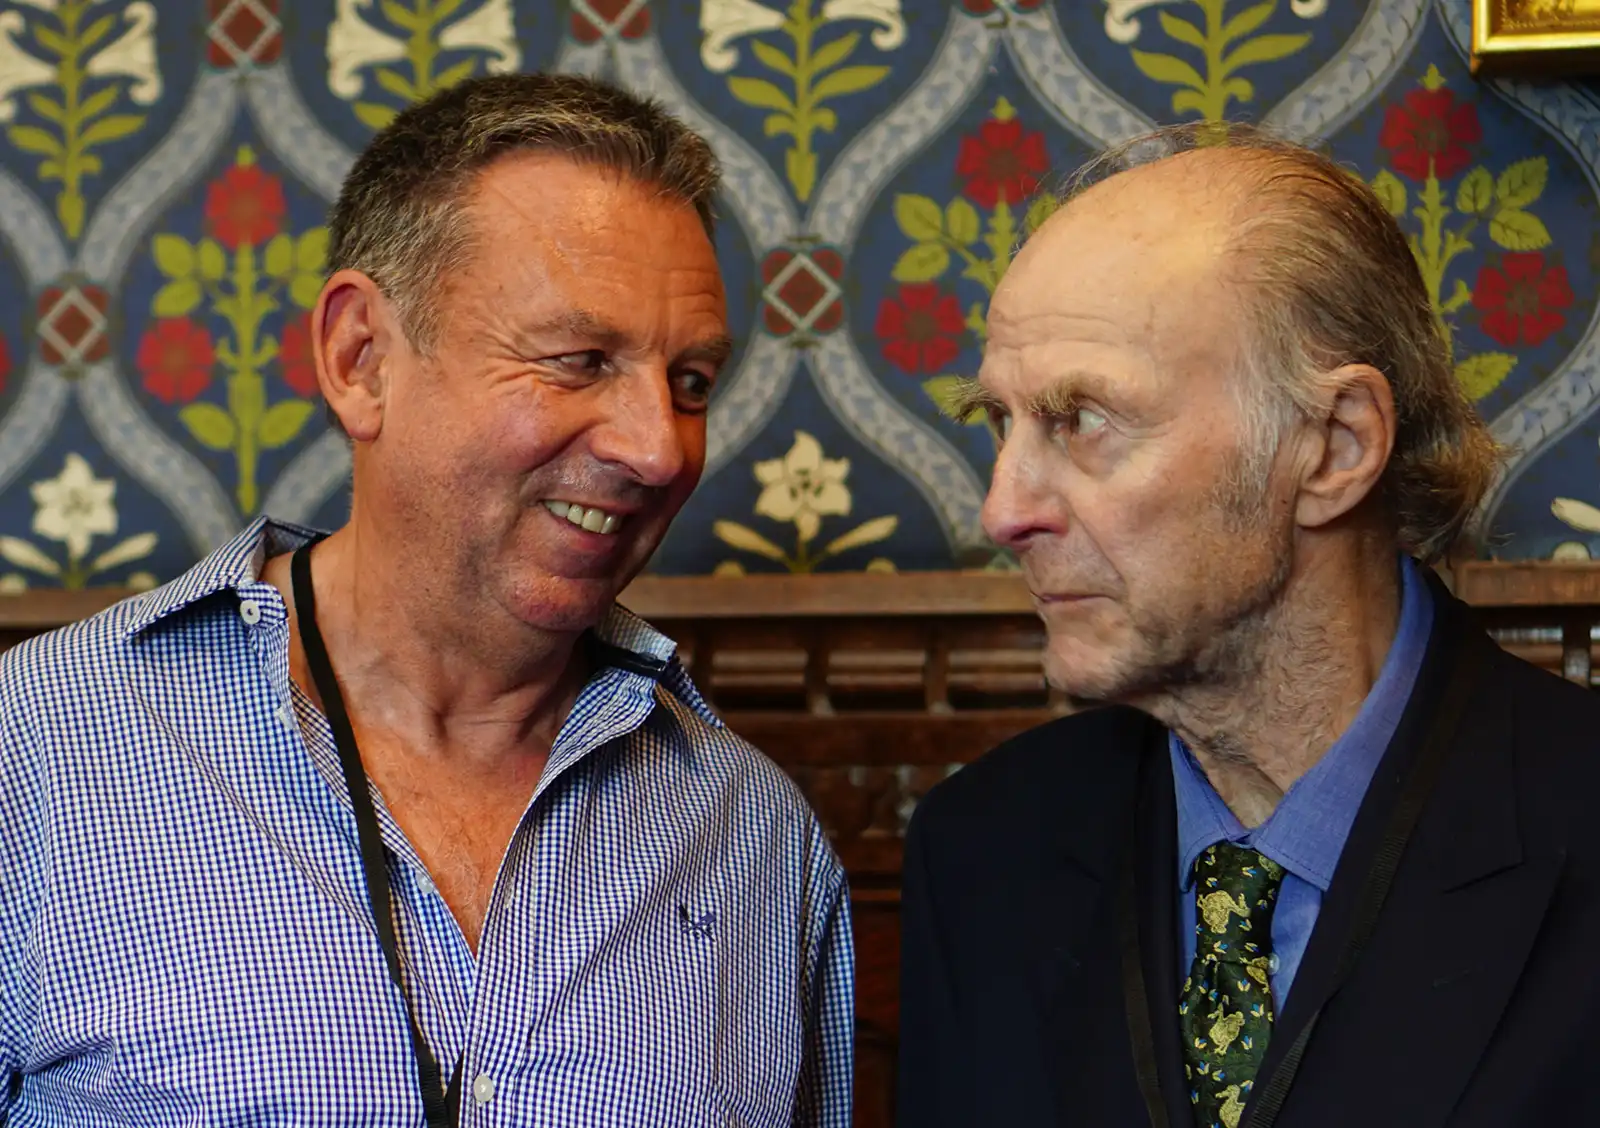 David with Sir Ranulph Fiennes